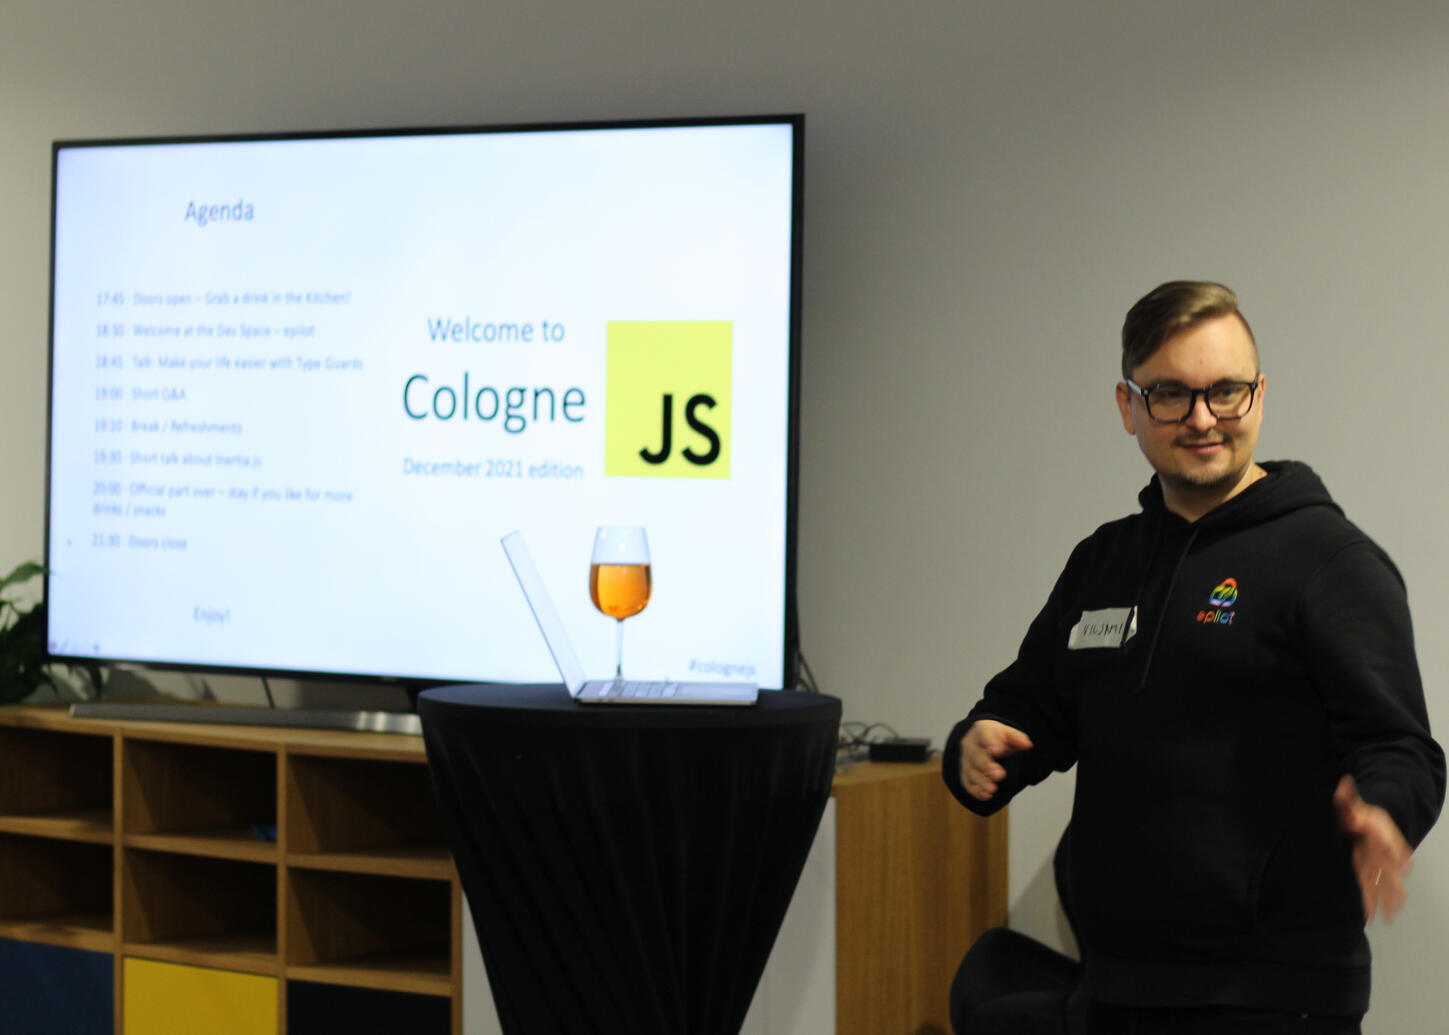 Viljami presenting at CologneJS